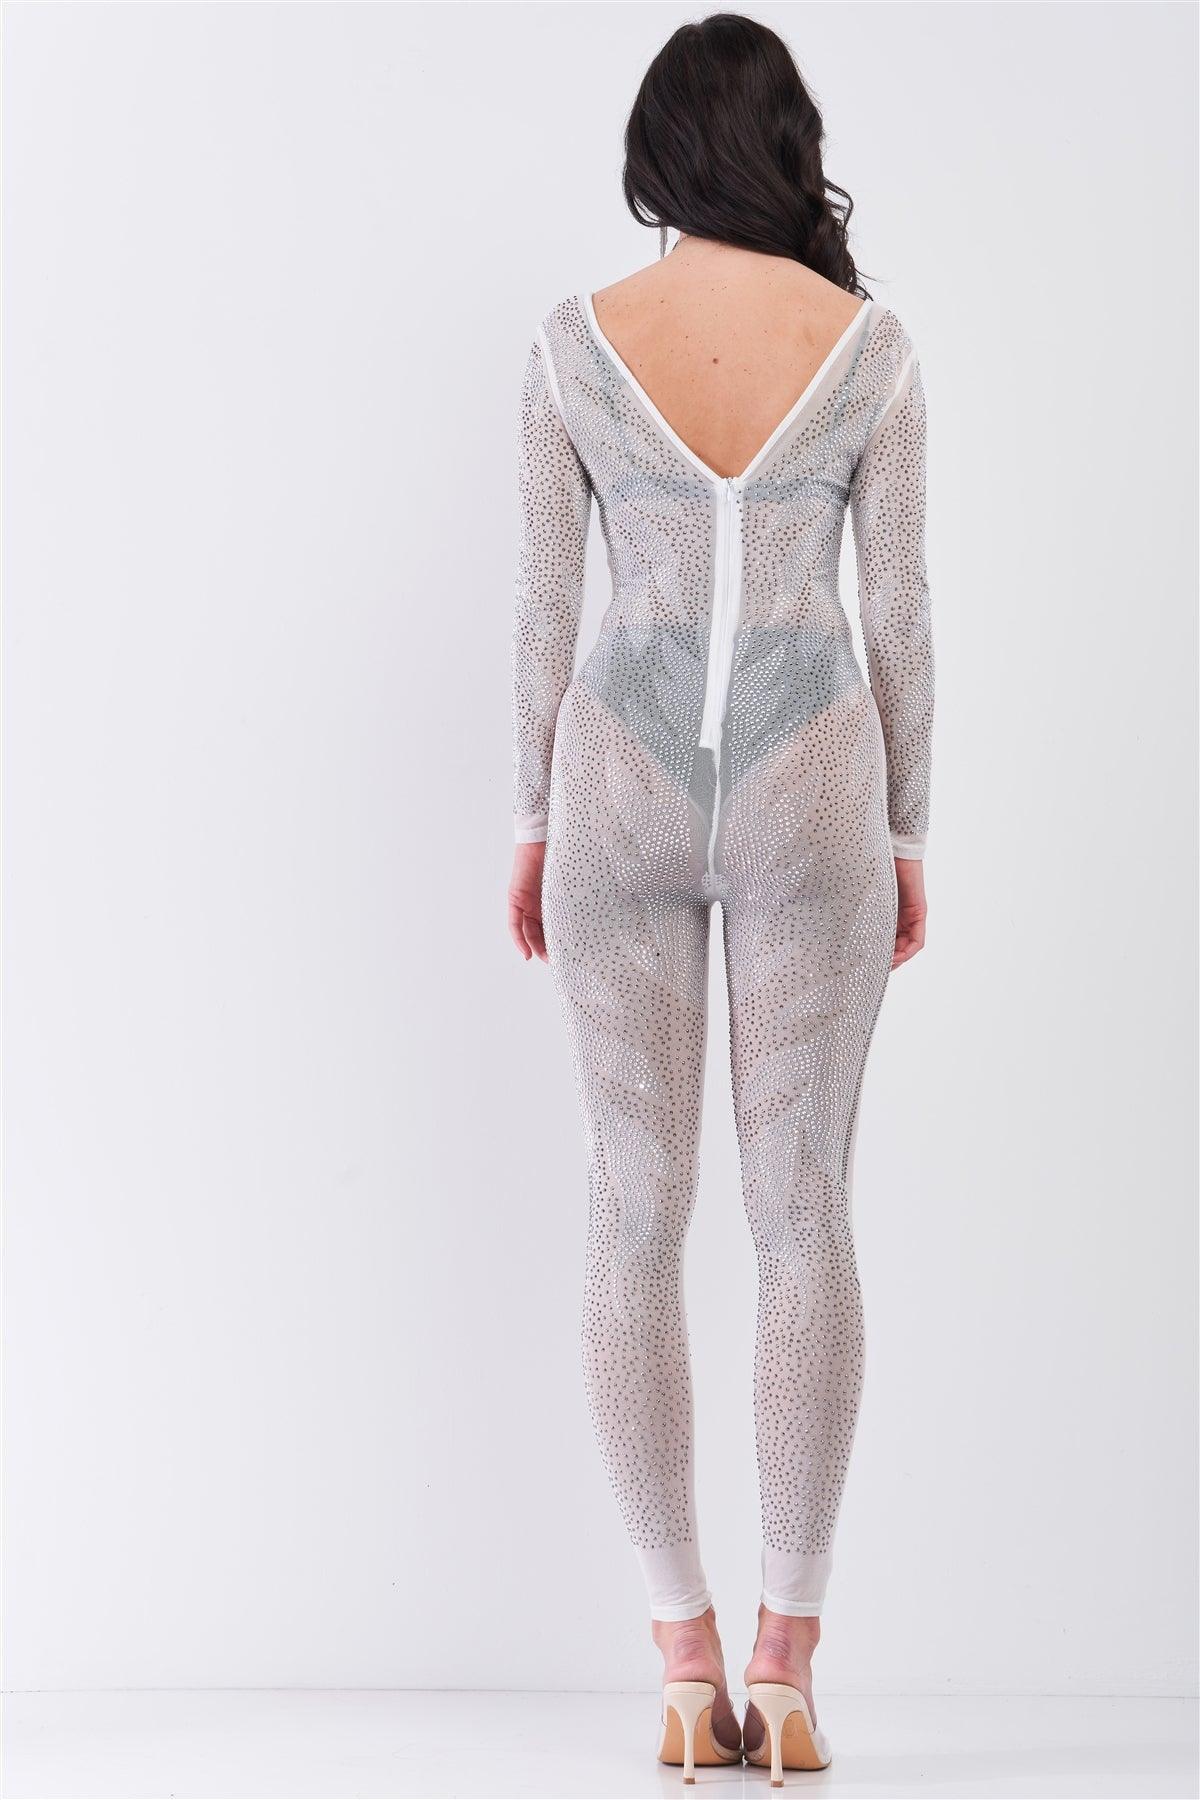 Women Sequin Rhinestone Jumpsuit Mesh See Through Bodycon Long Pants Romper  | eBay